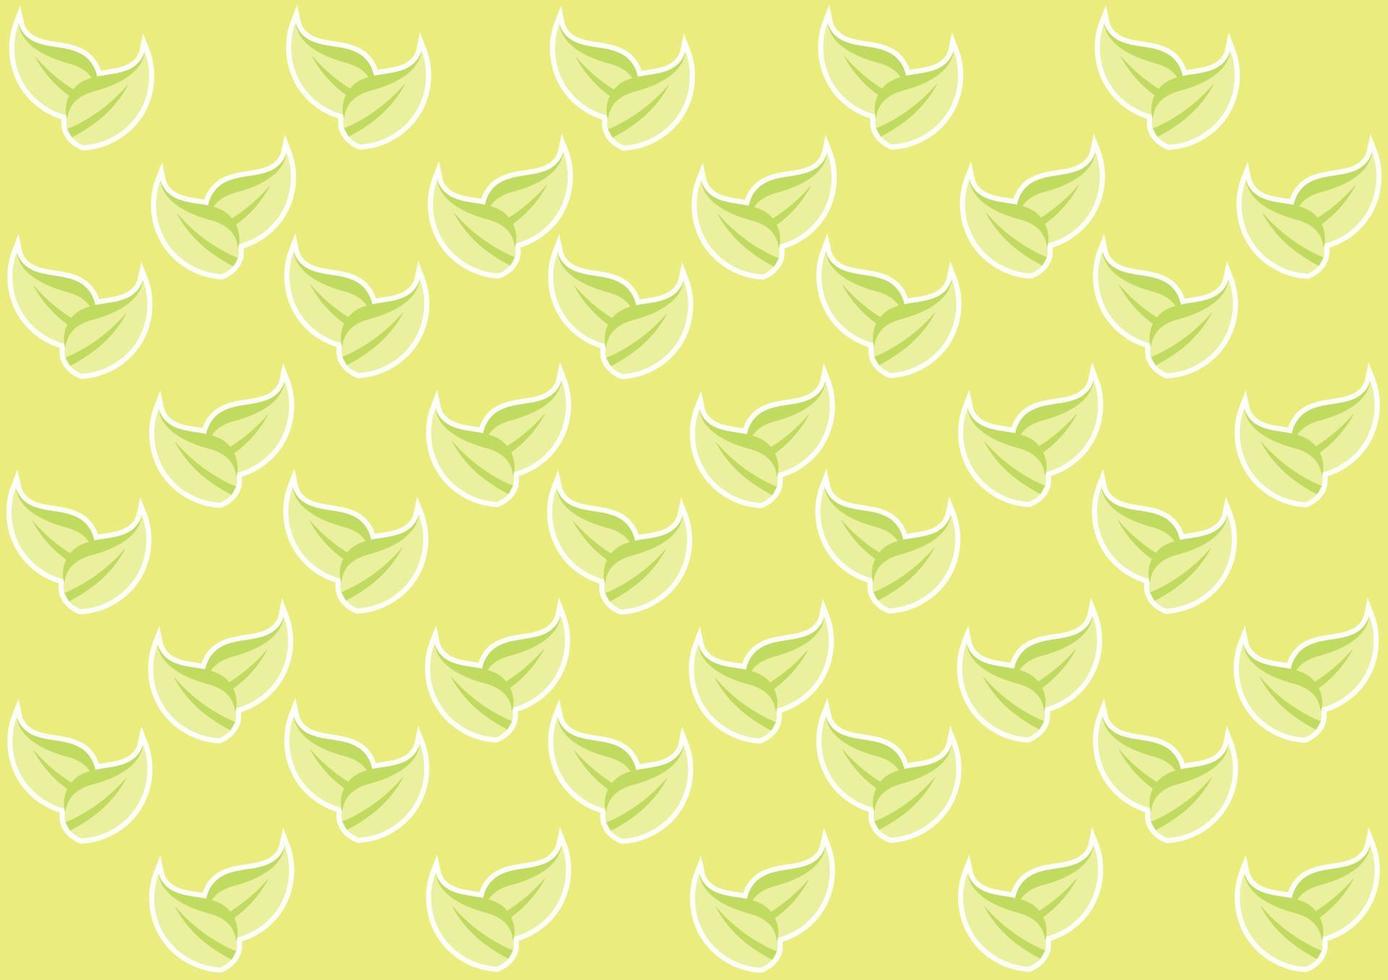 sfondo di foglie di tè fresco vettore